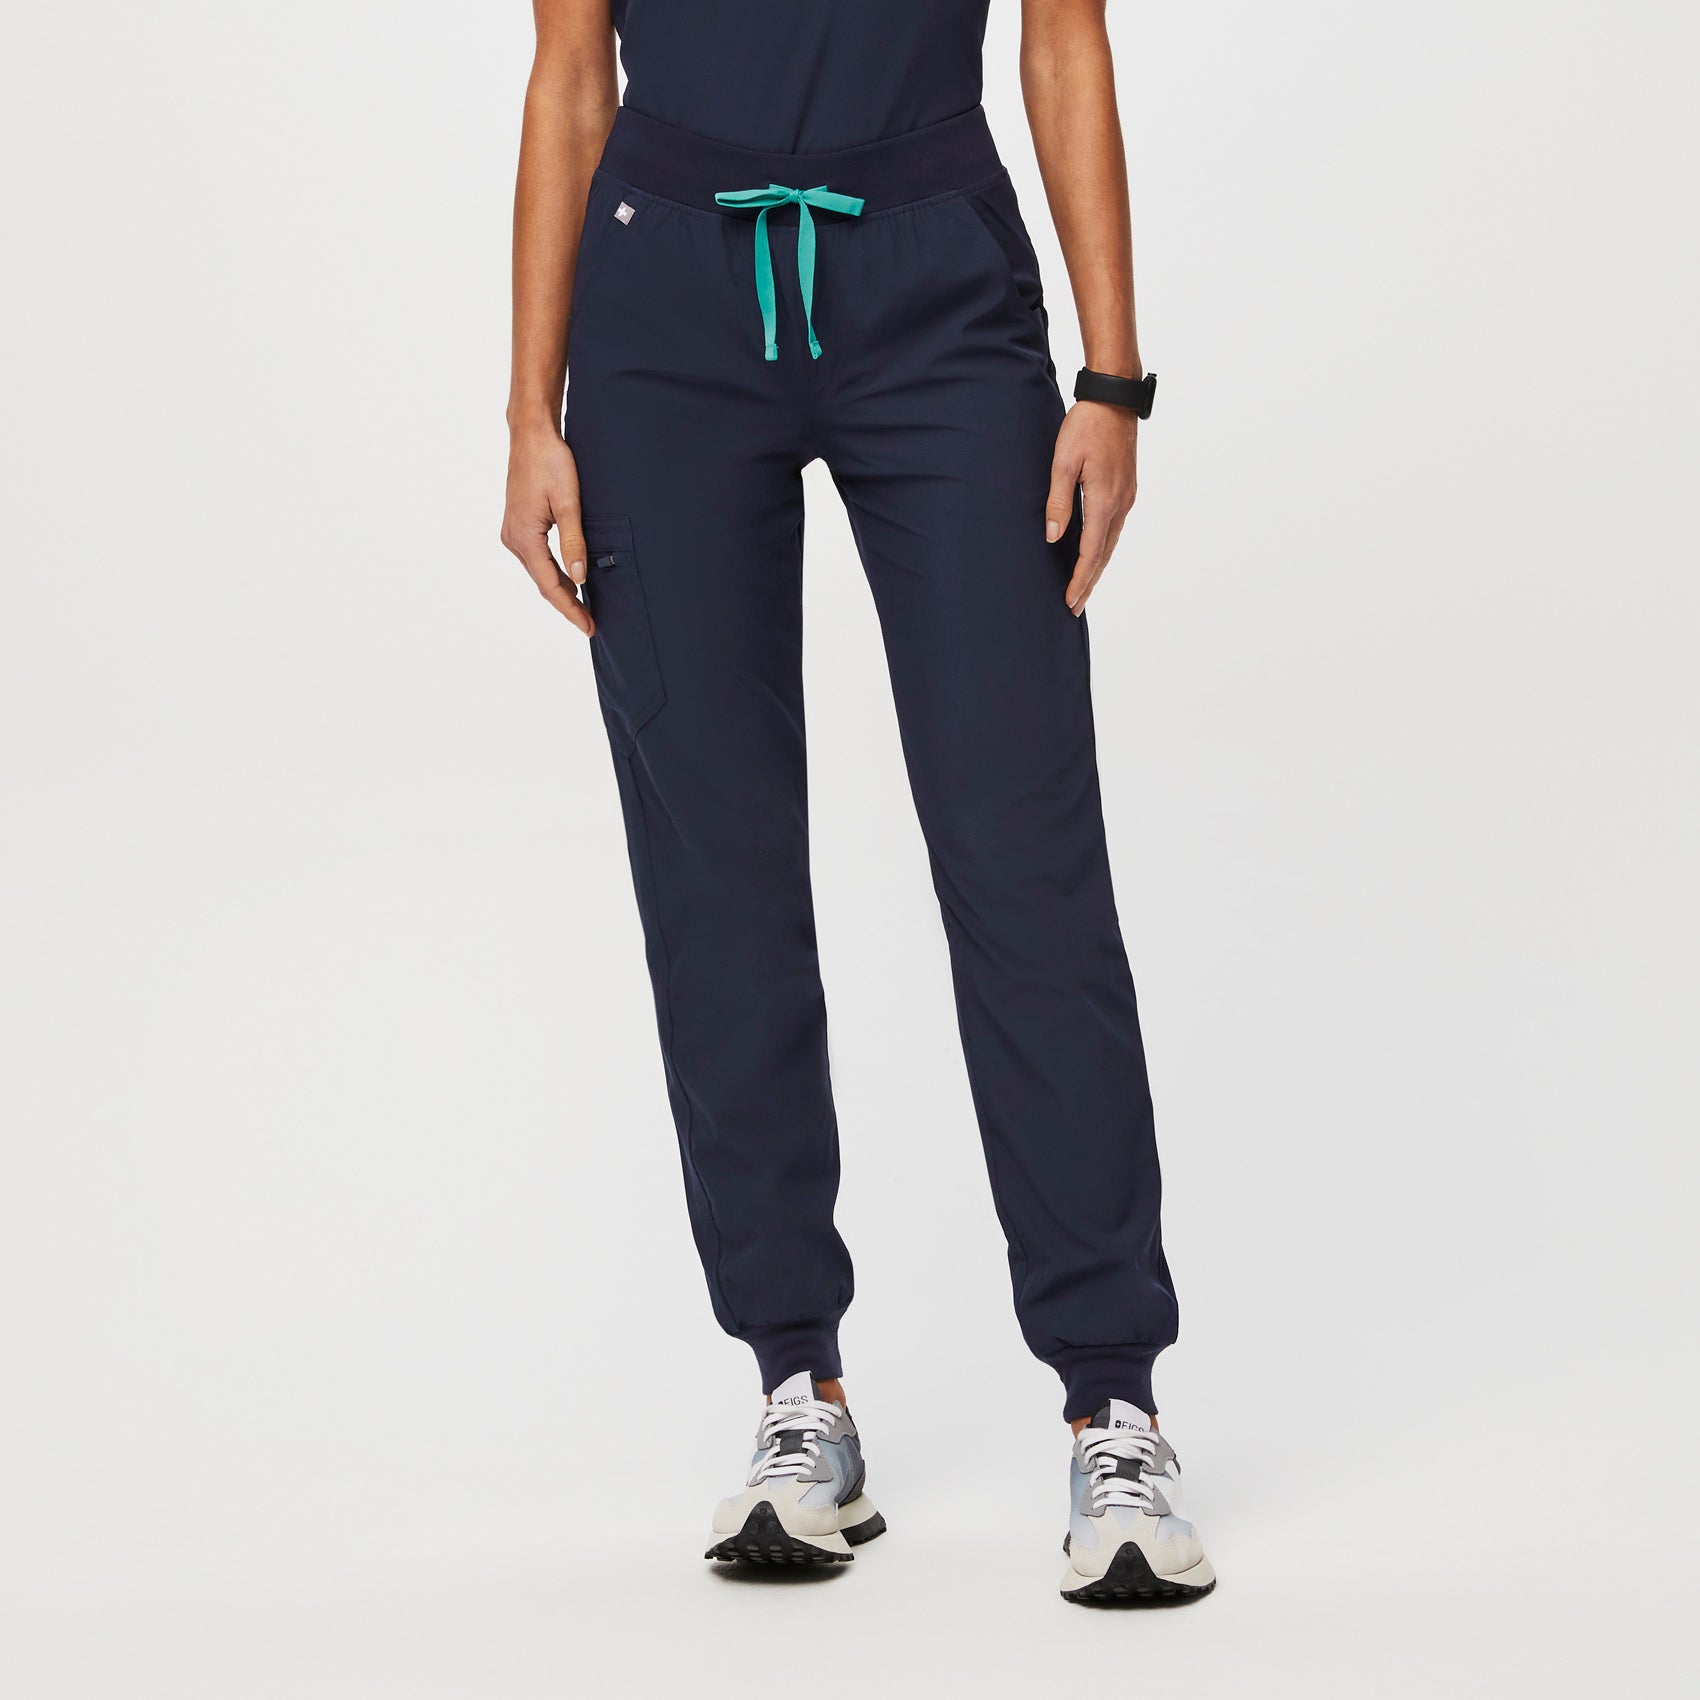 FIGS Zamora Jogger Style Scrub Pants for Women - Raspberry Sorbet, Tall  Small in Saudi Arabia